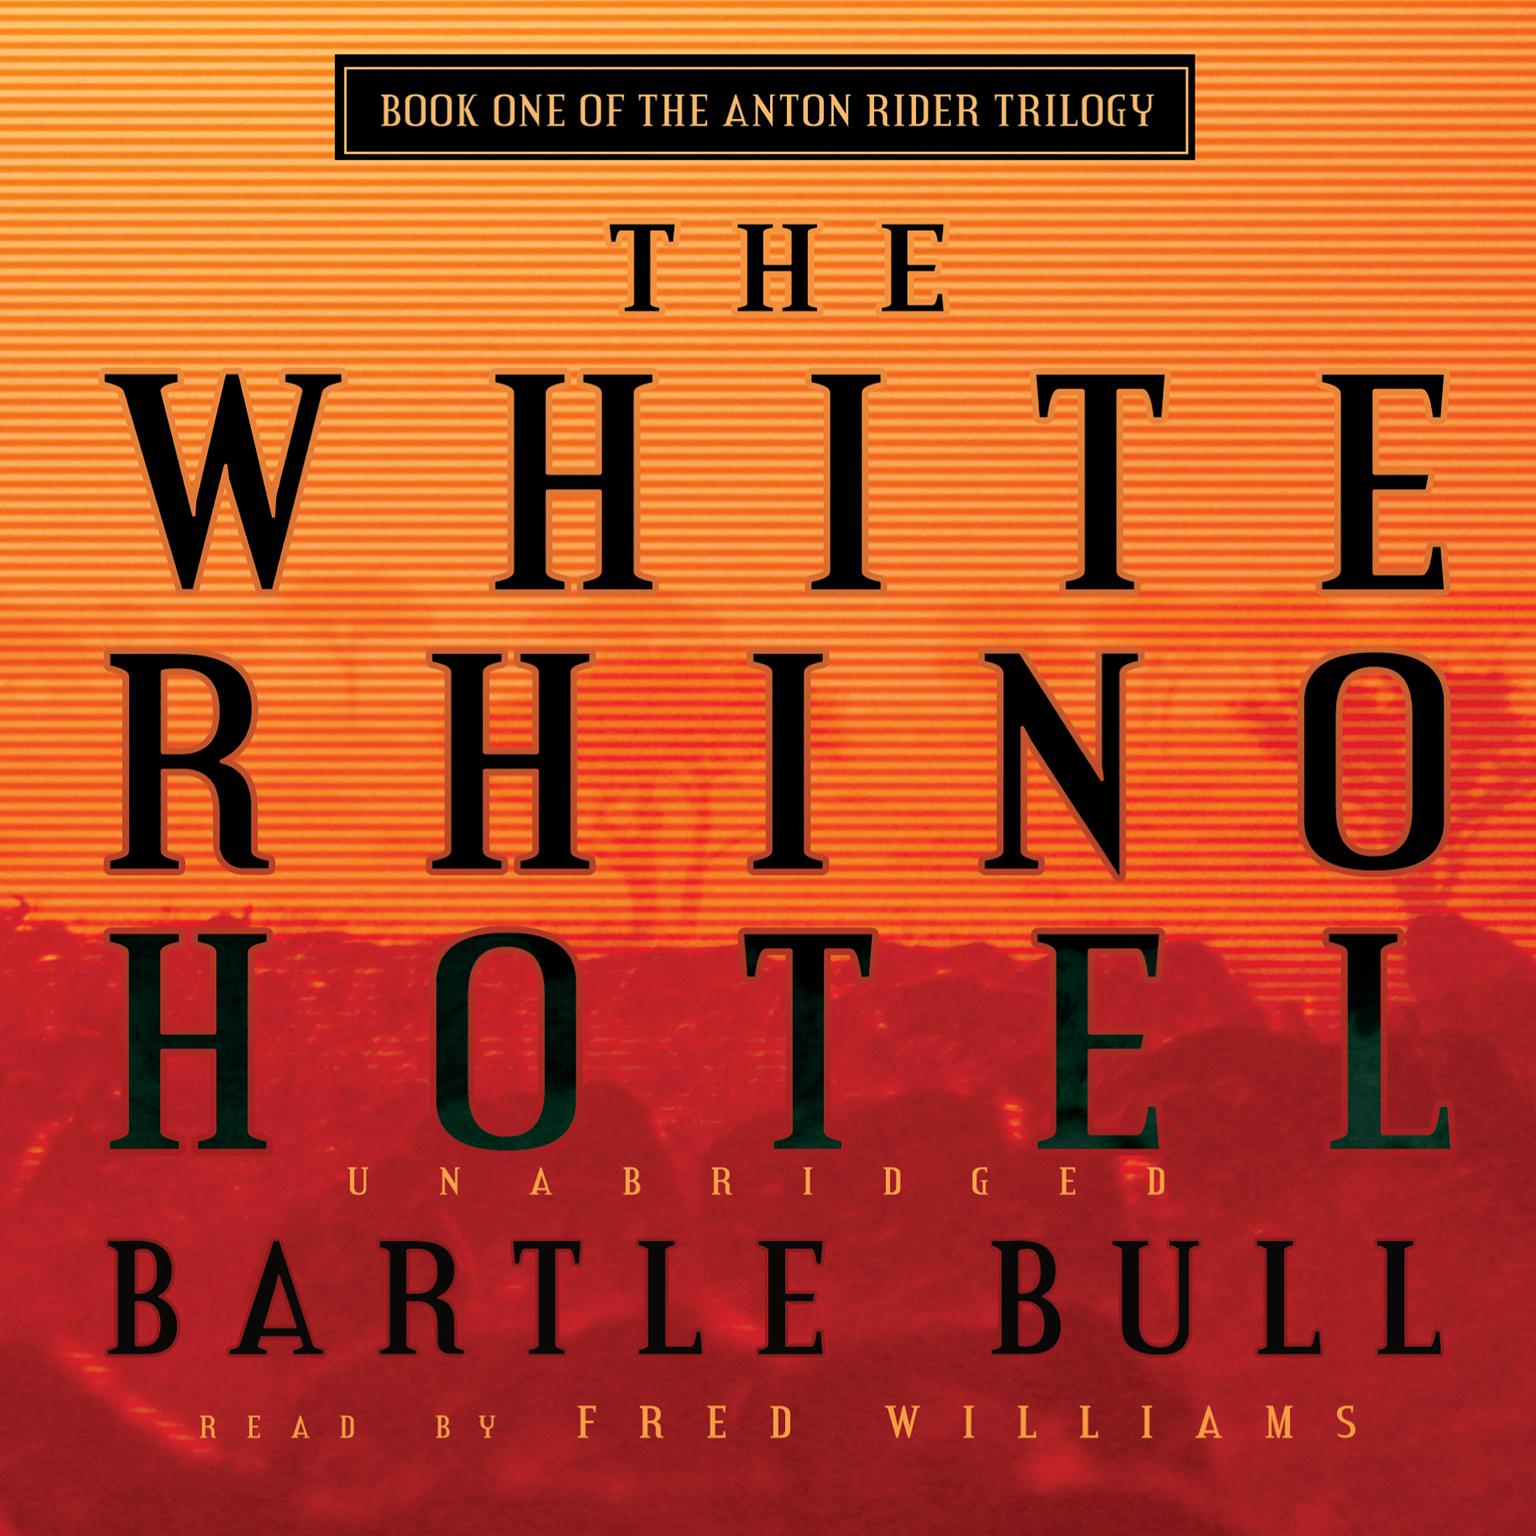 The White Rhino Hotel Audiobook, by Bartle Bull